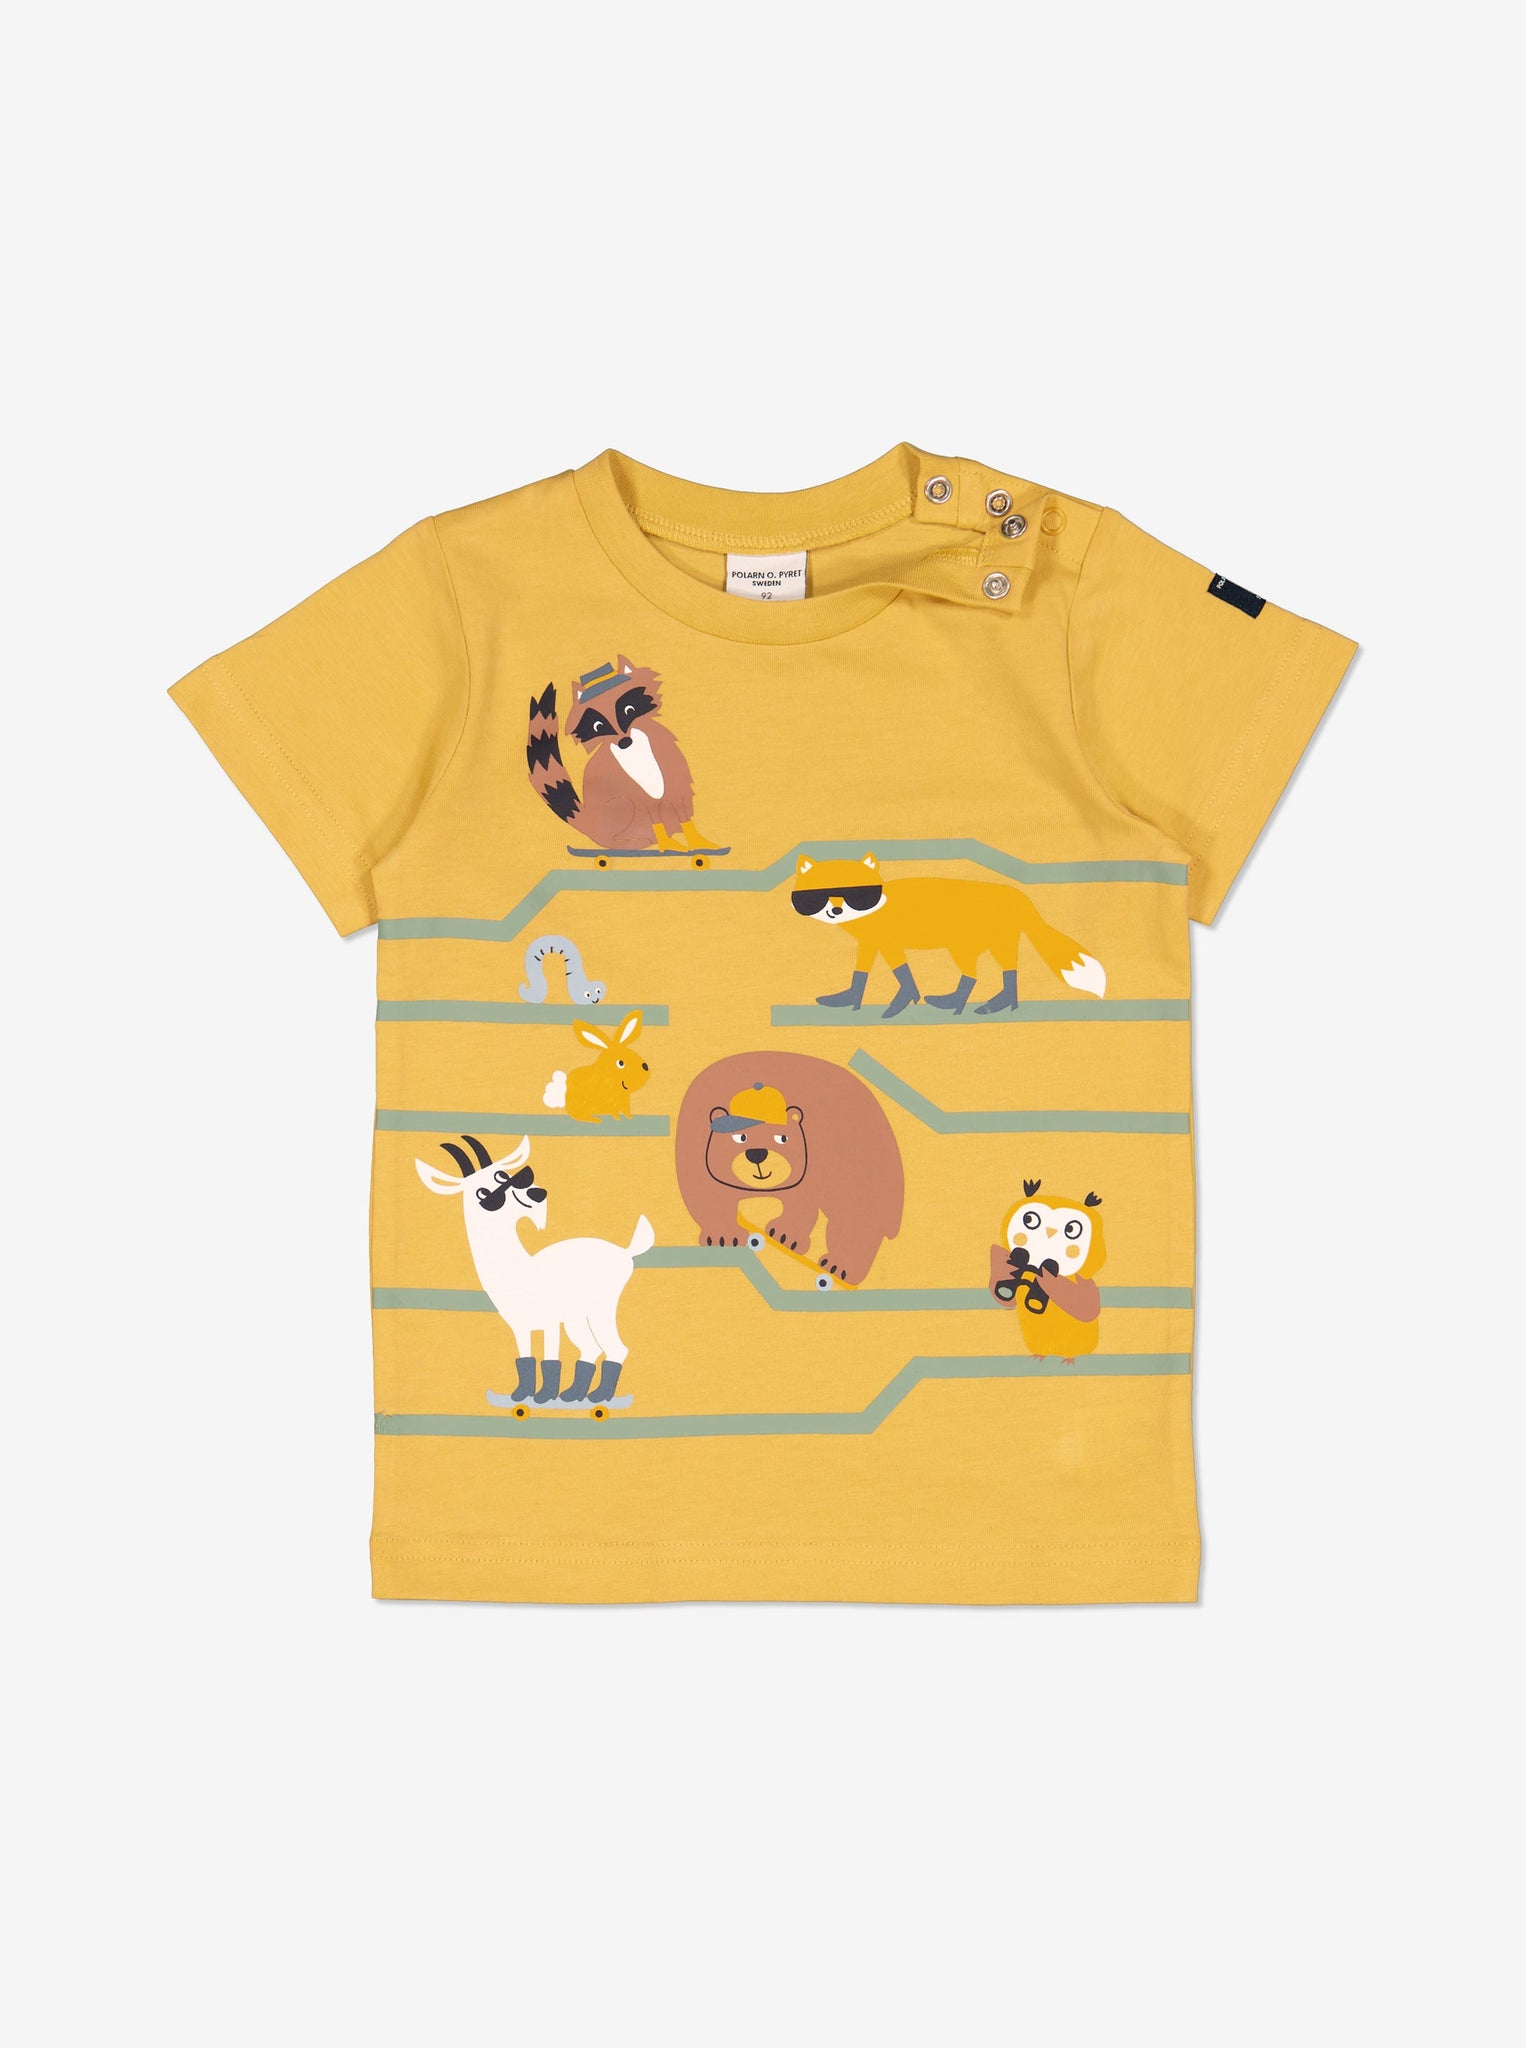 Organic Cotton Yellow Kids T-Shirt